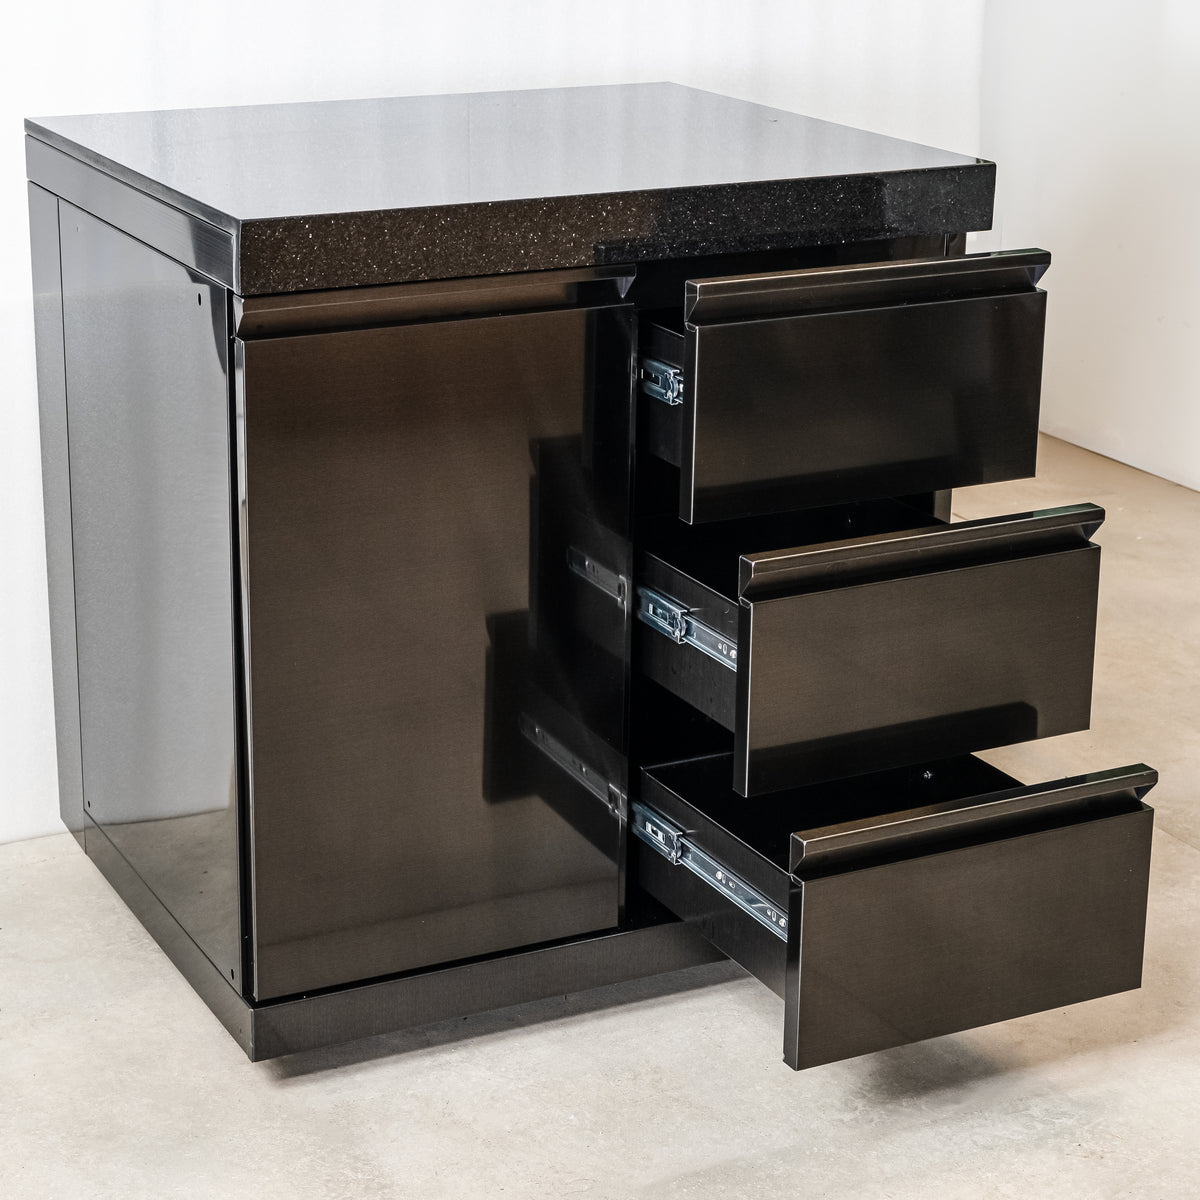 Draco Grills Outdoor Kitchen Black Stainless Steel Waste Bin Cabinet